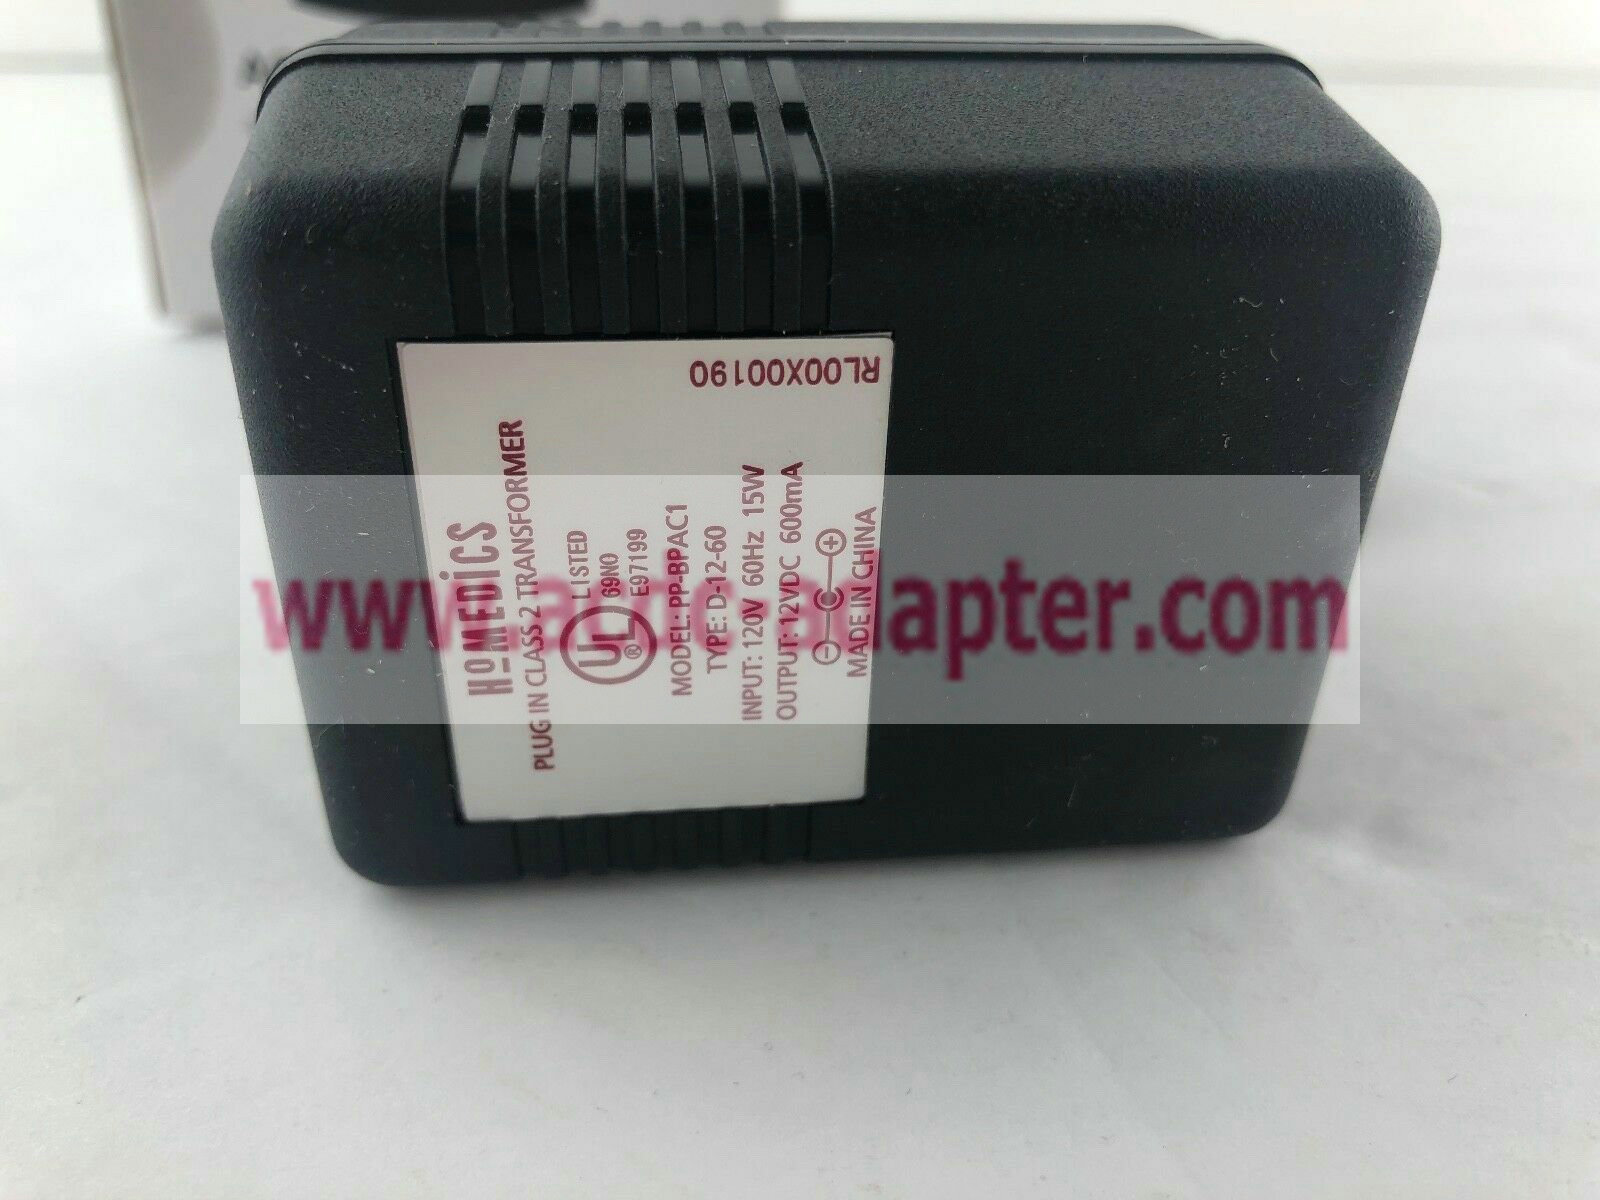 New Homedics THERA P AC Adapter PP-BPAC1 D-12-60 12V 600mA Plug in Class 2 Transfo - Click Image to Close